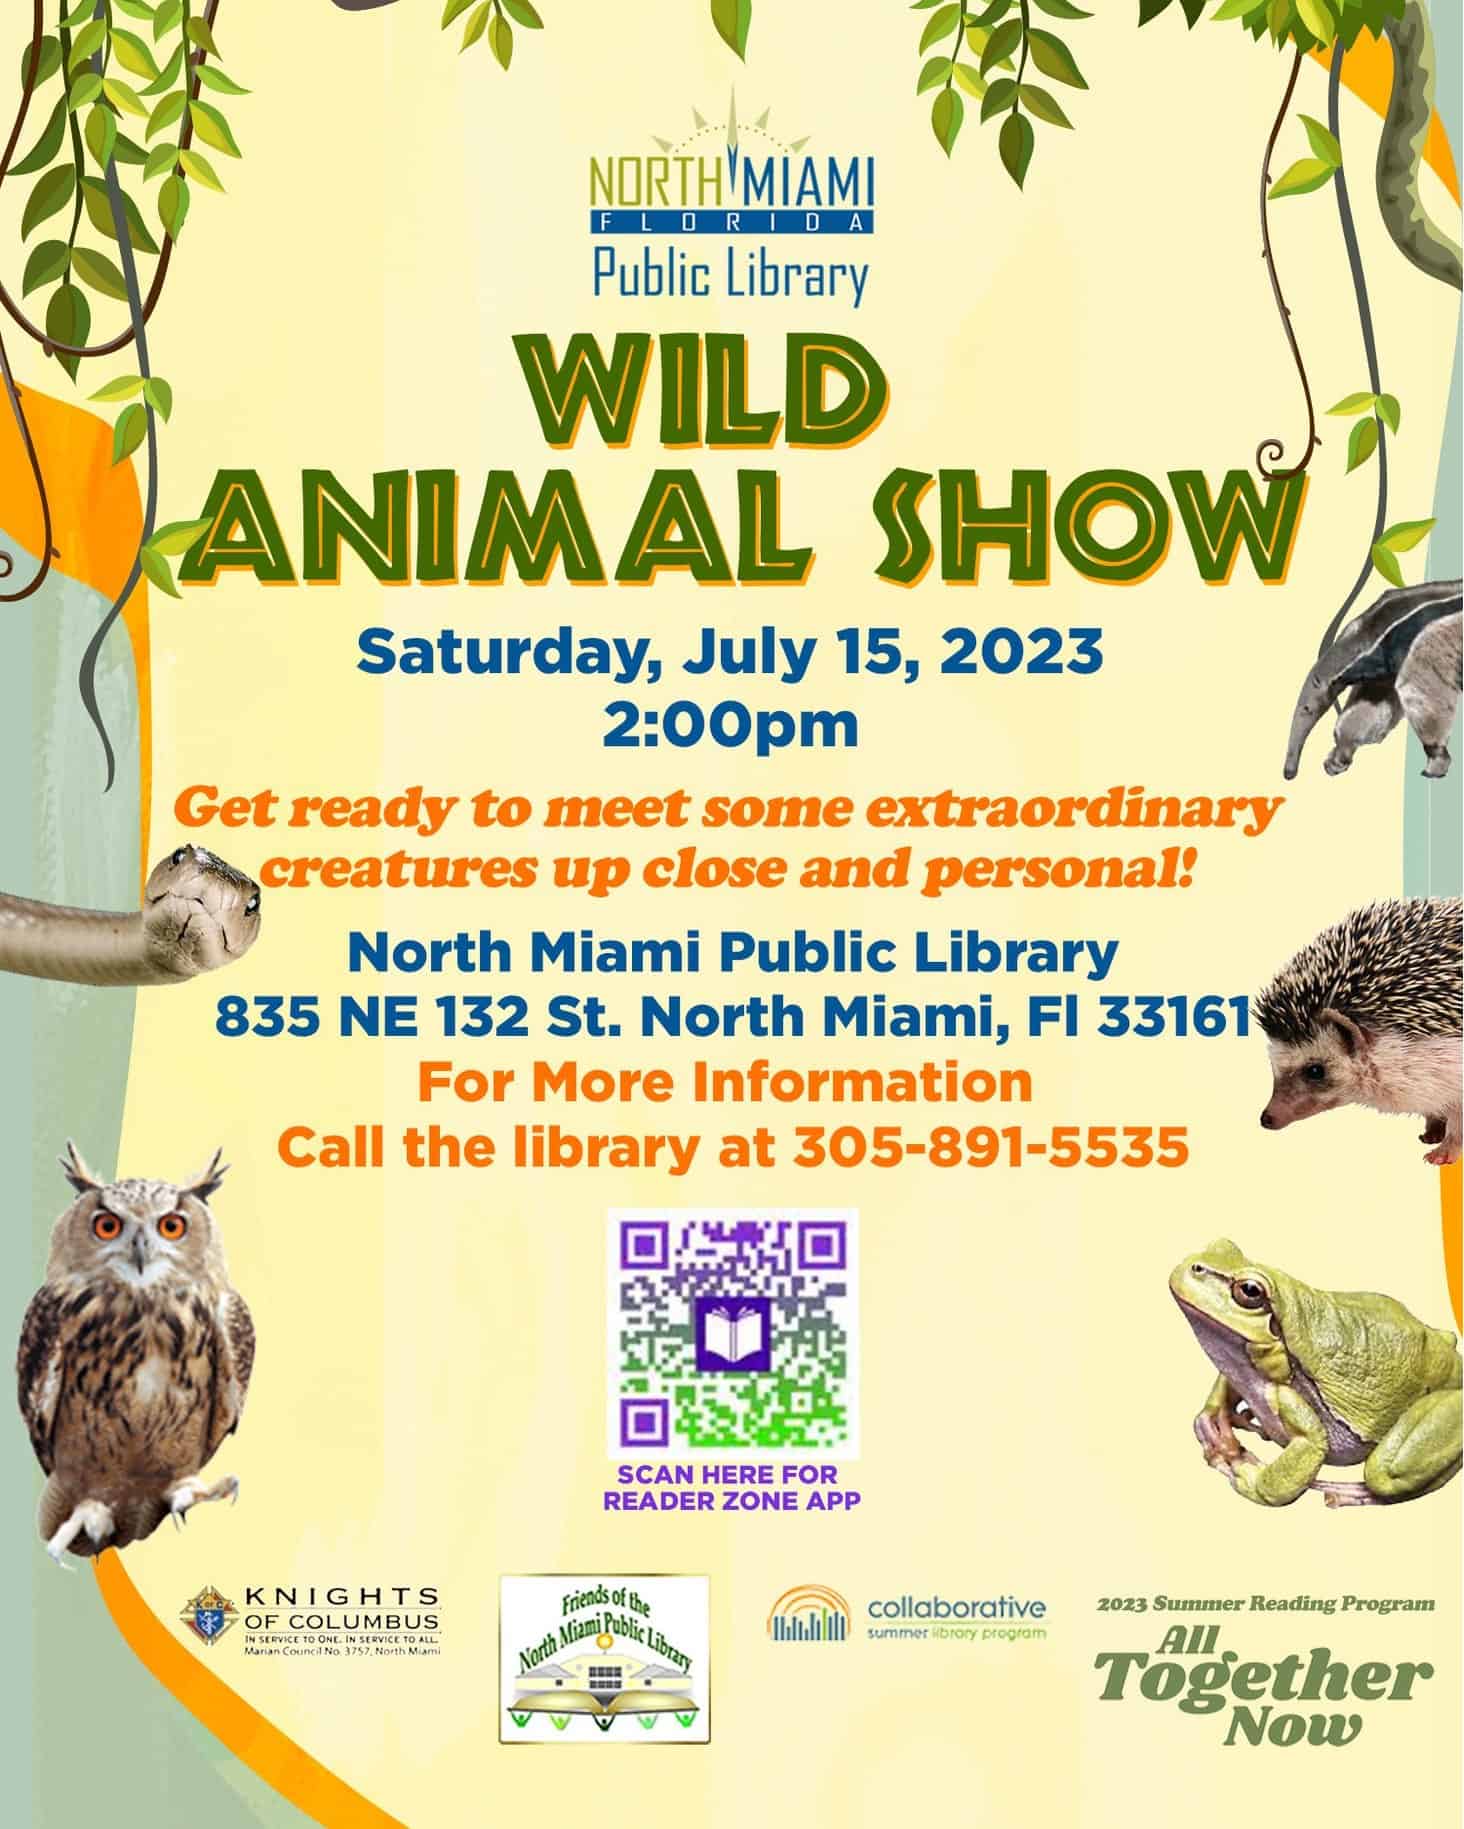 North Miami Public Library - Wild Animal Show - Details